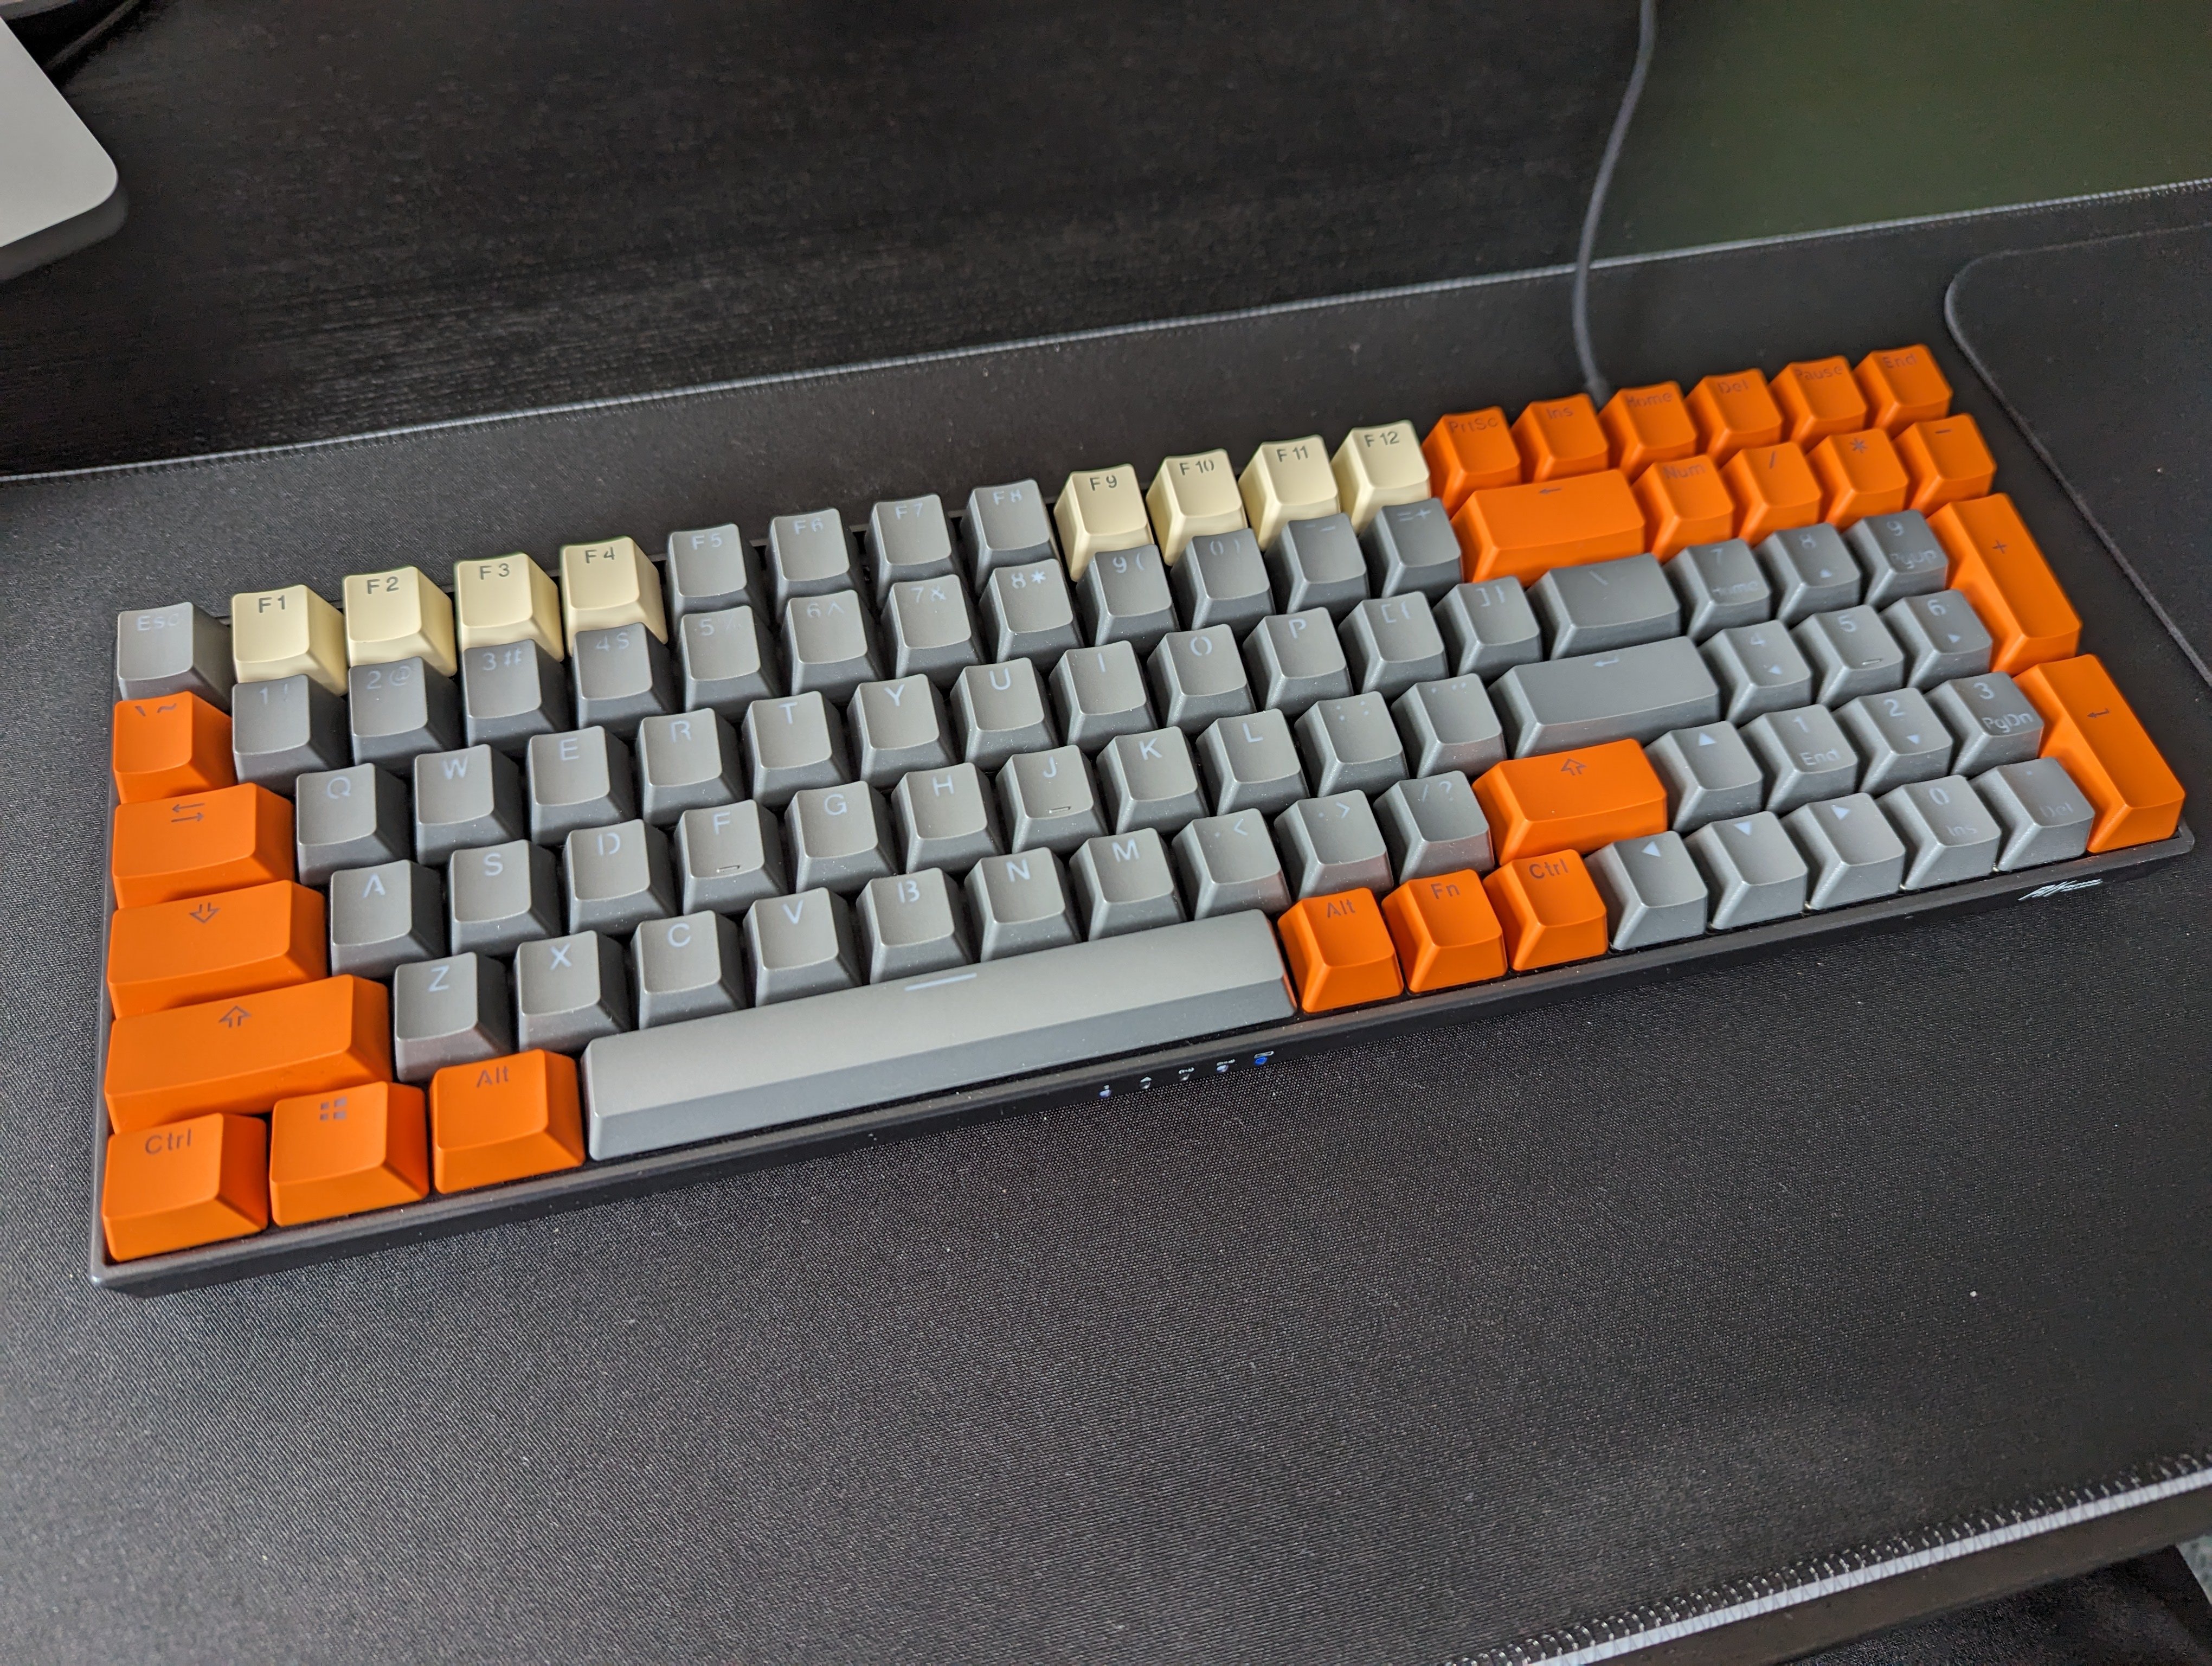 Photo of a keyboard